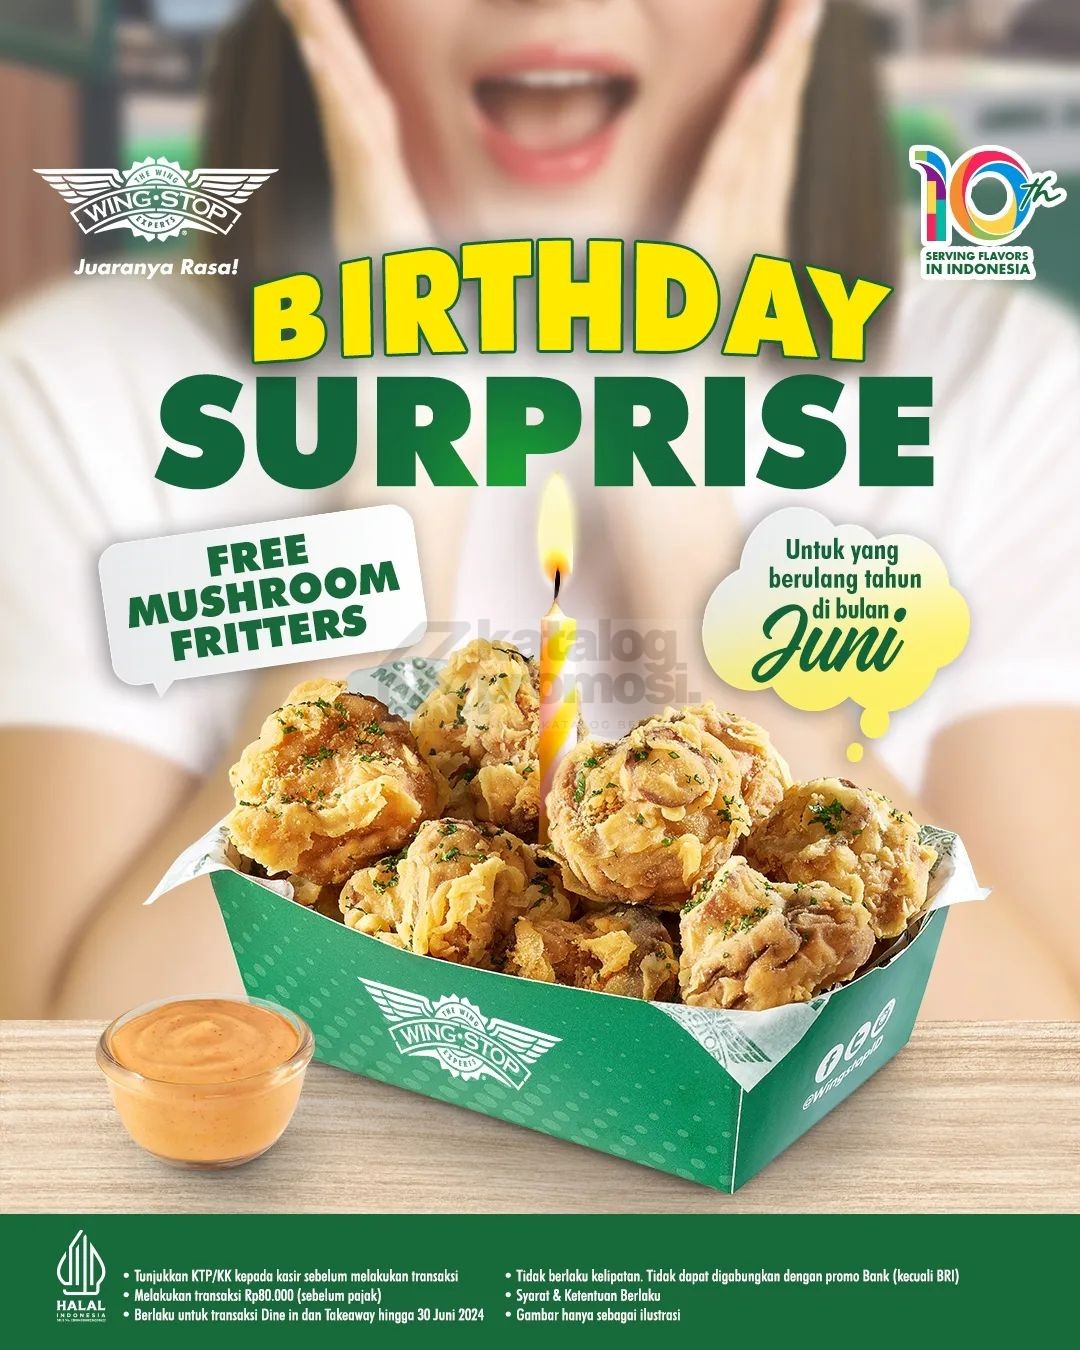 Promo WINGSTOP BIRTHDAY SURPRISE GRATIS Mushroom Fritters buat kalian yang berulang tahun di bulan JUNI 2024